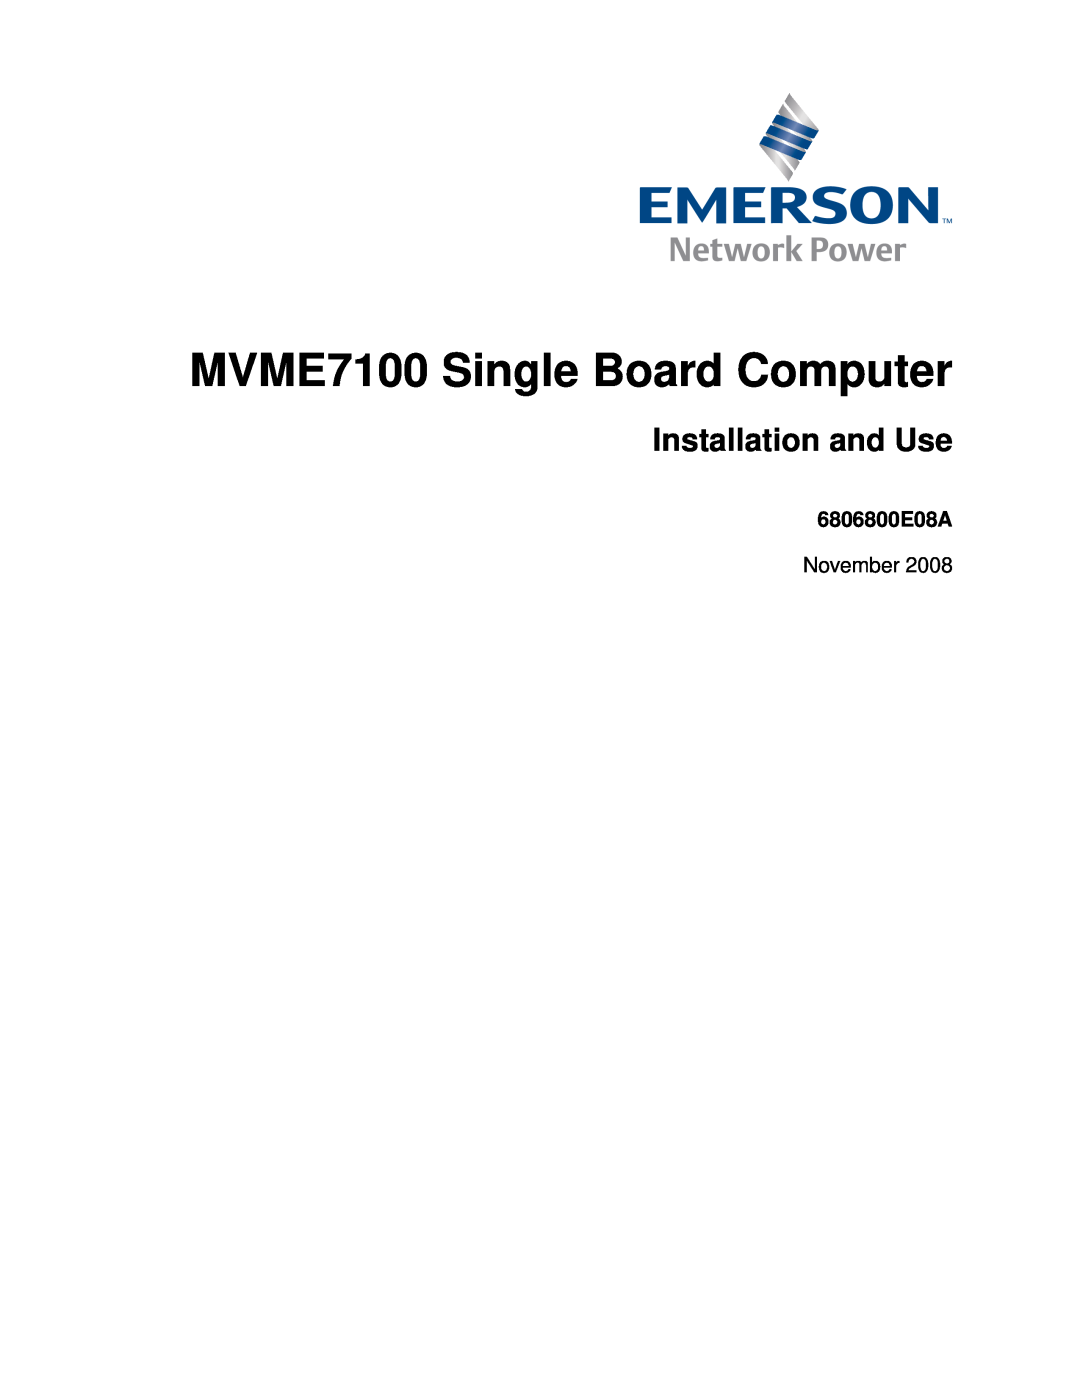 Emerson manual 6806800E08A, MVME7100 Single Board Computer, Installation and Use, November 